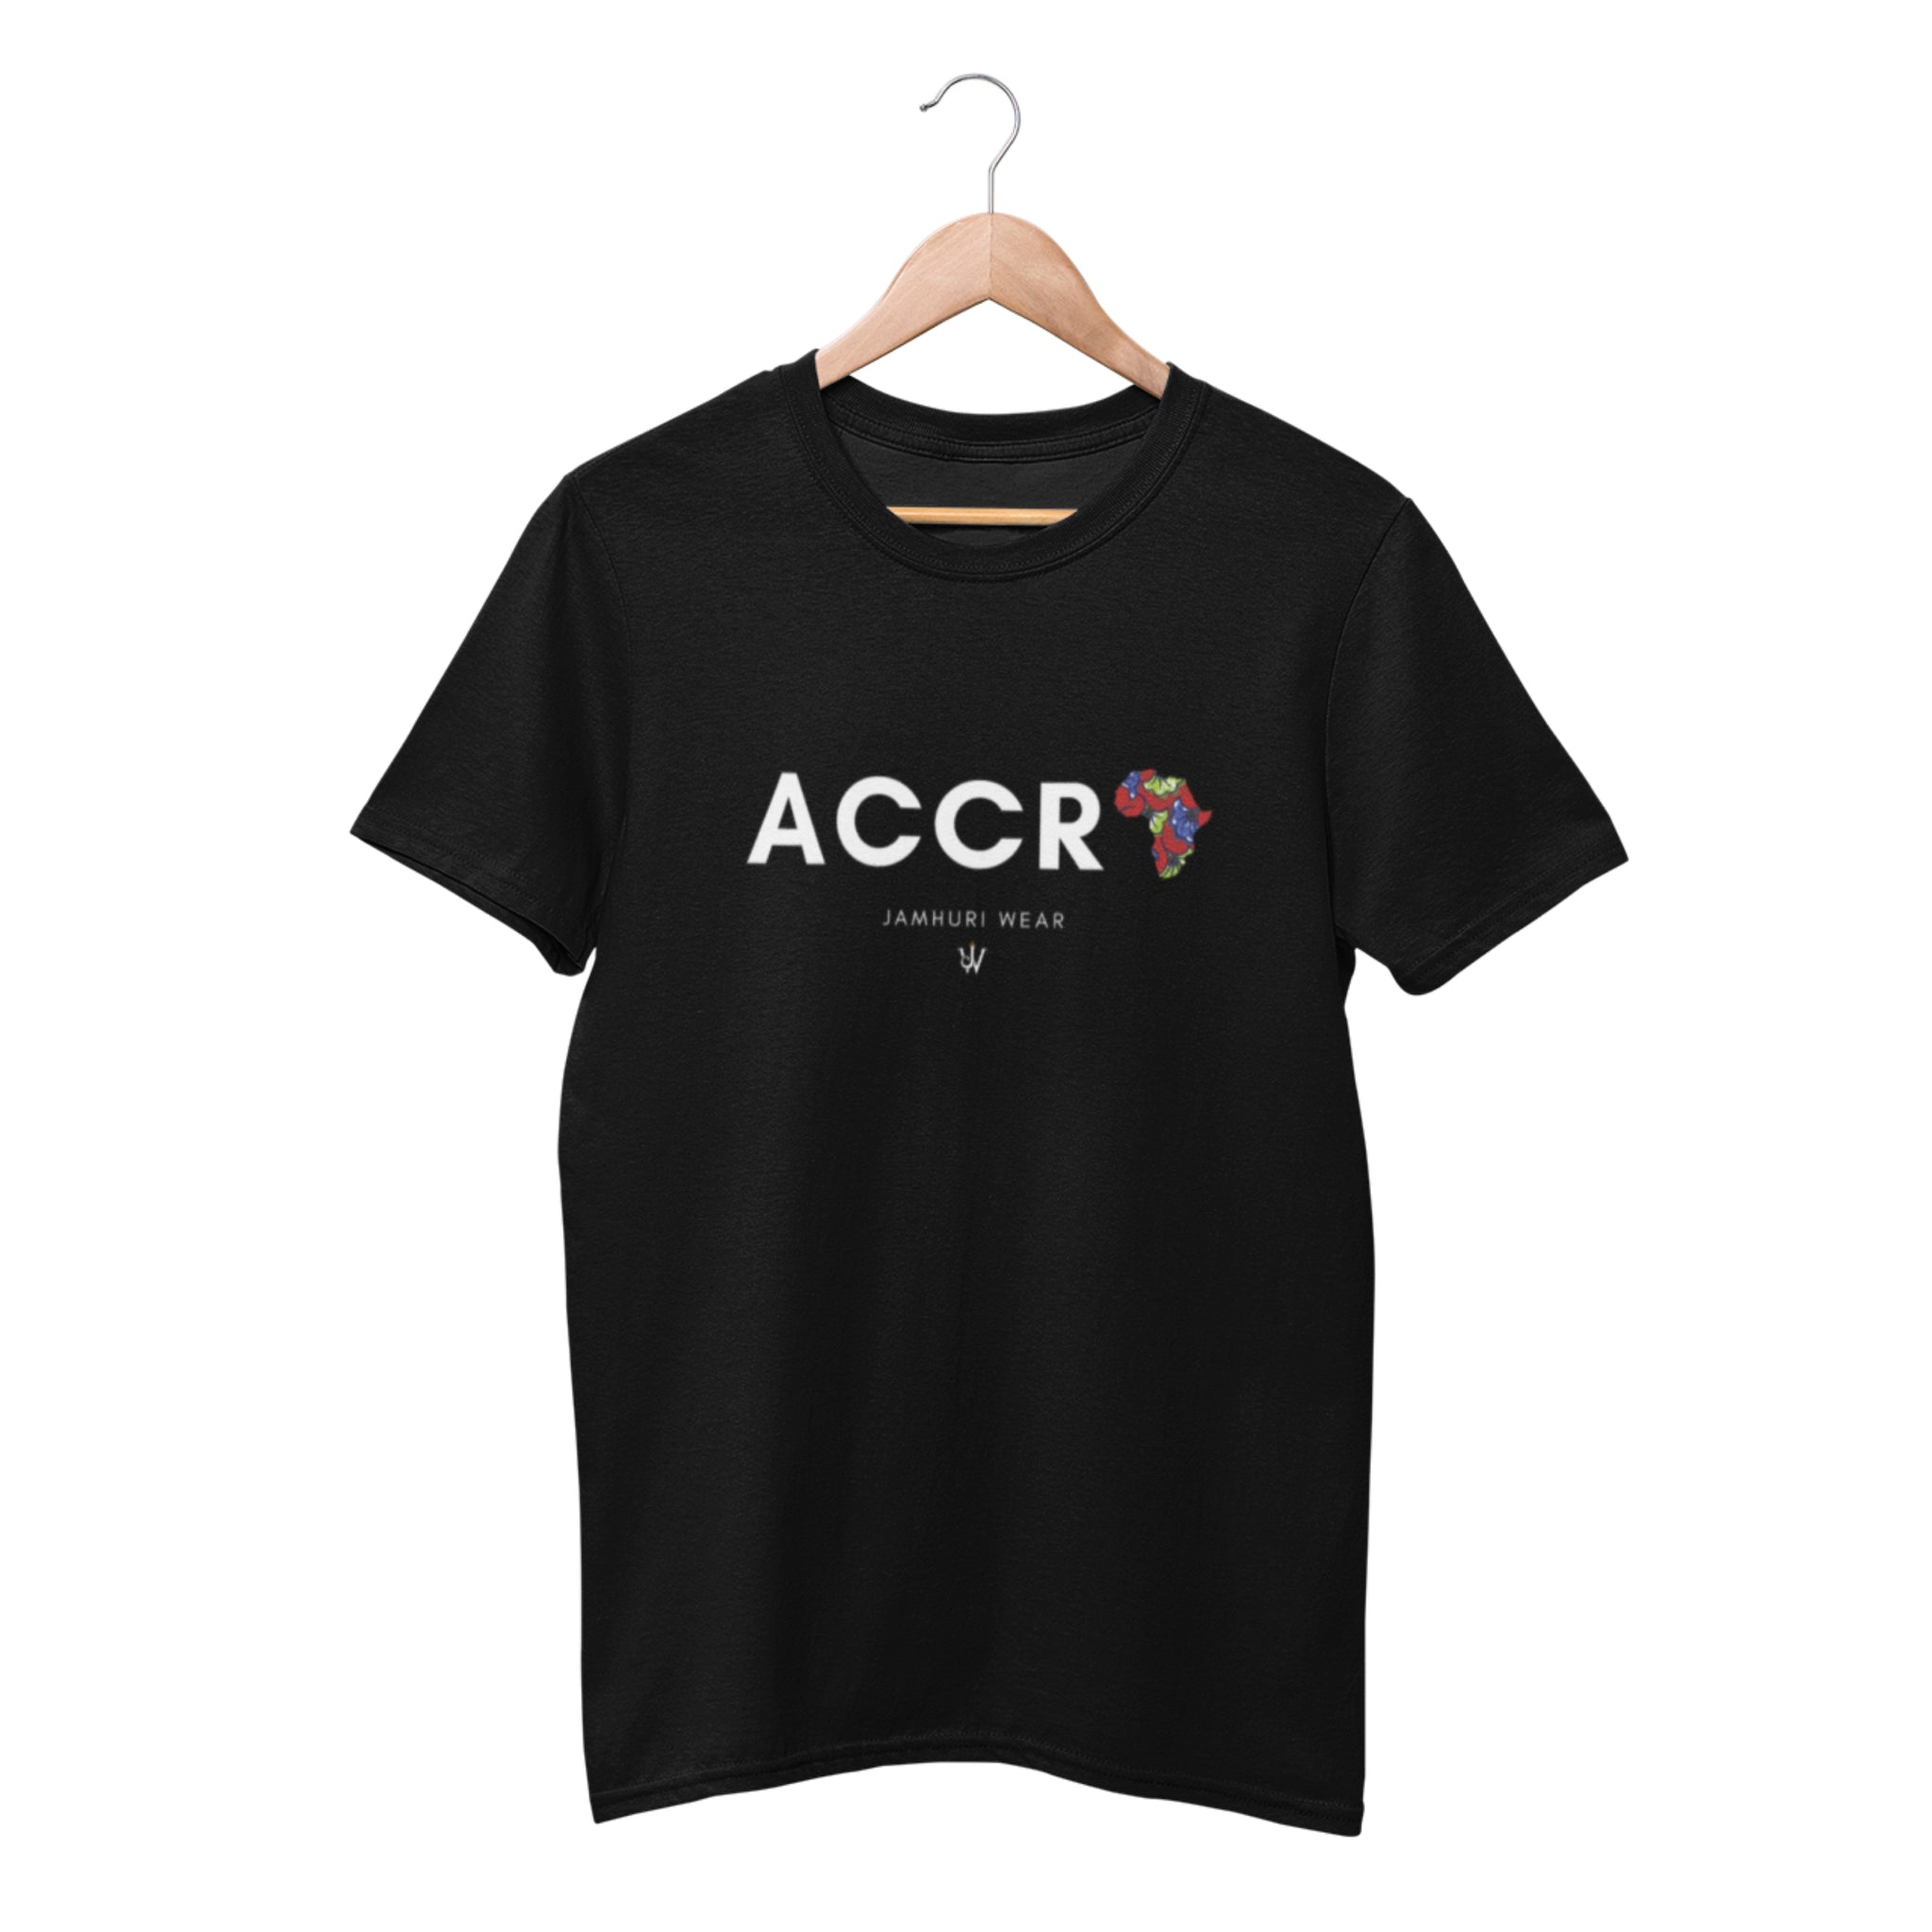 Accra A 4 Africa All City T-shirt - jamhuriwear.com